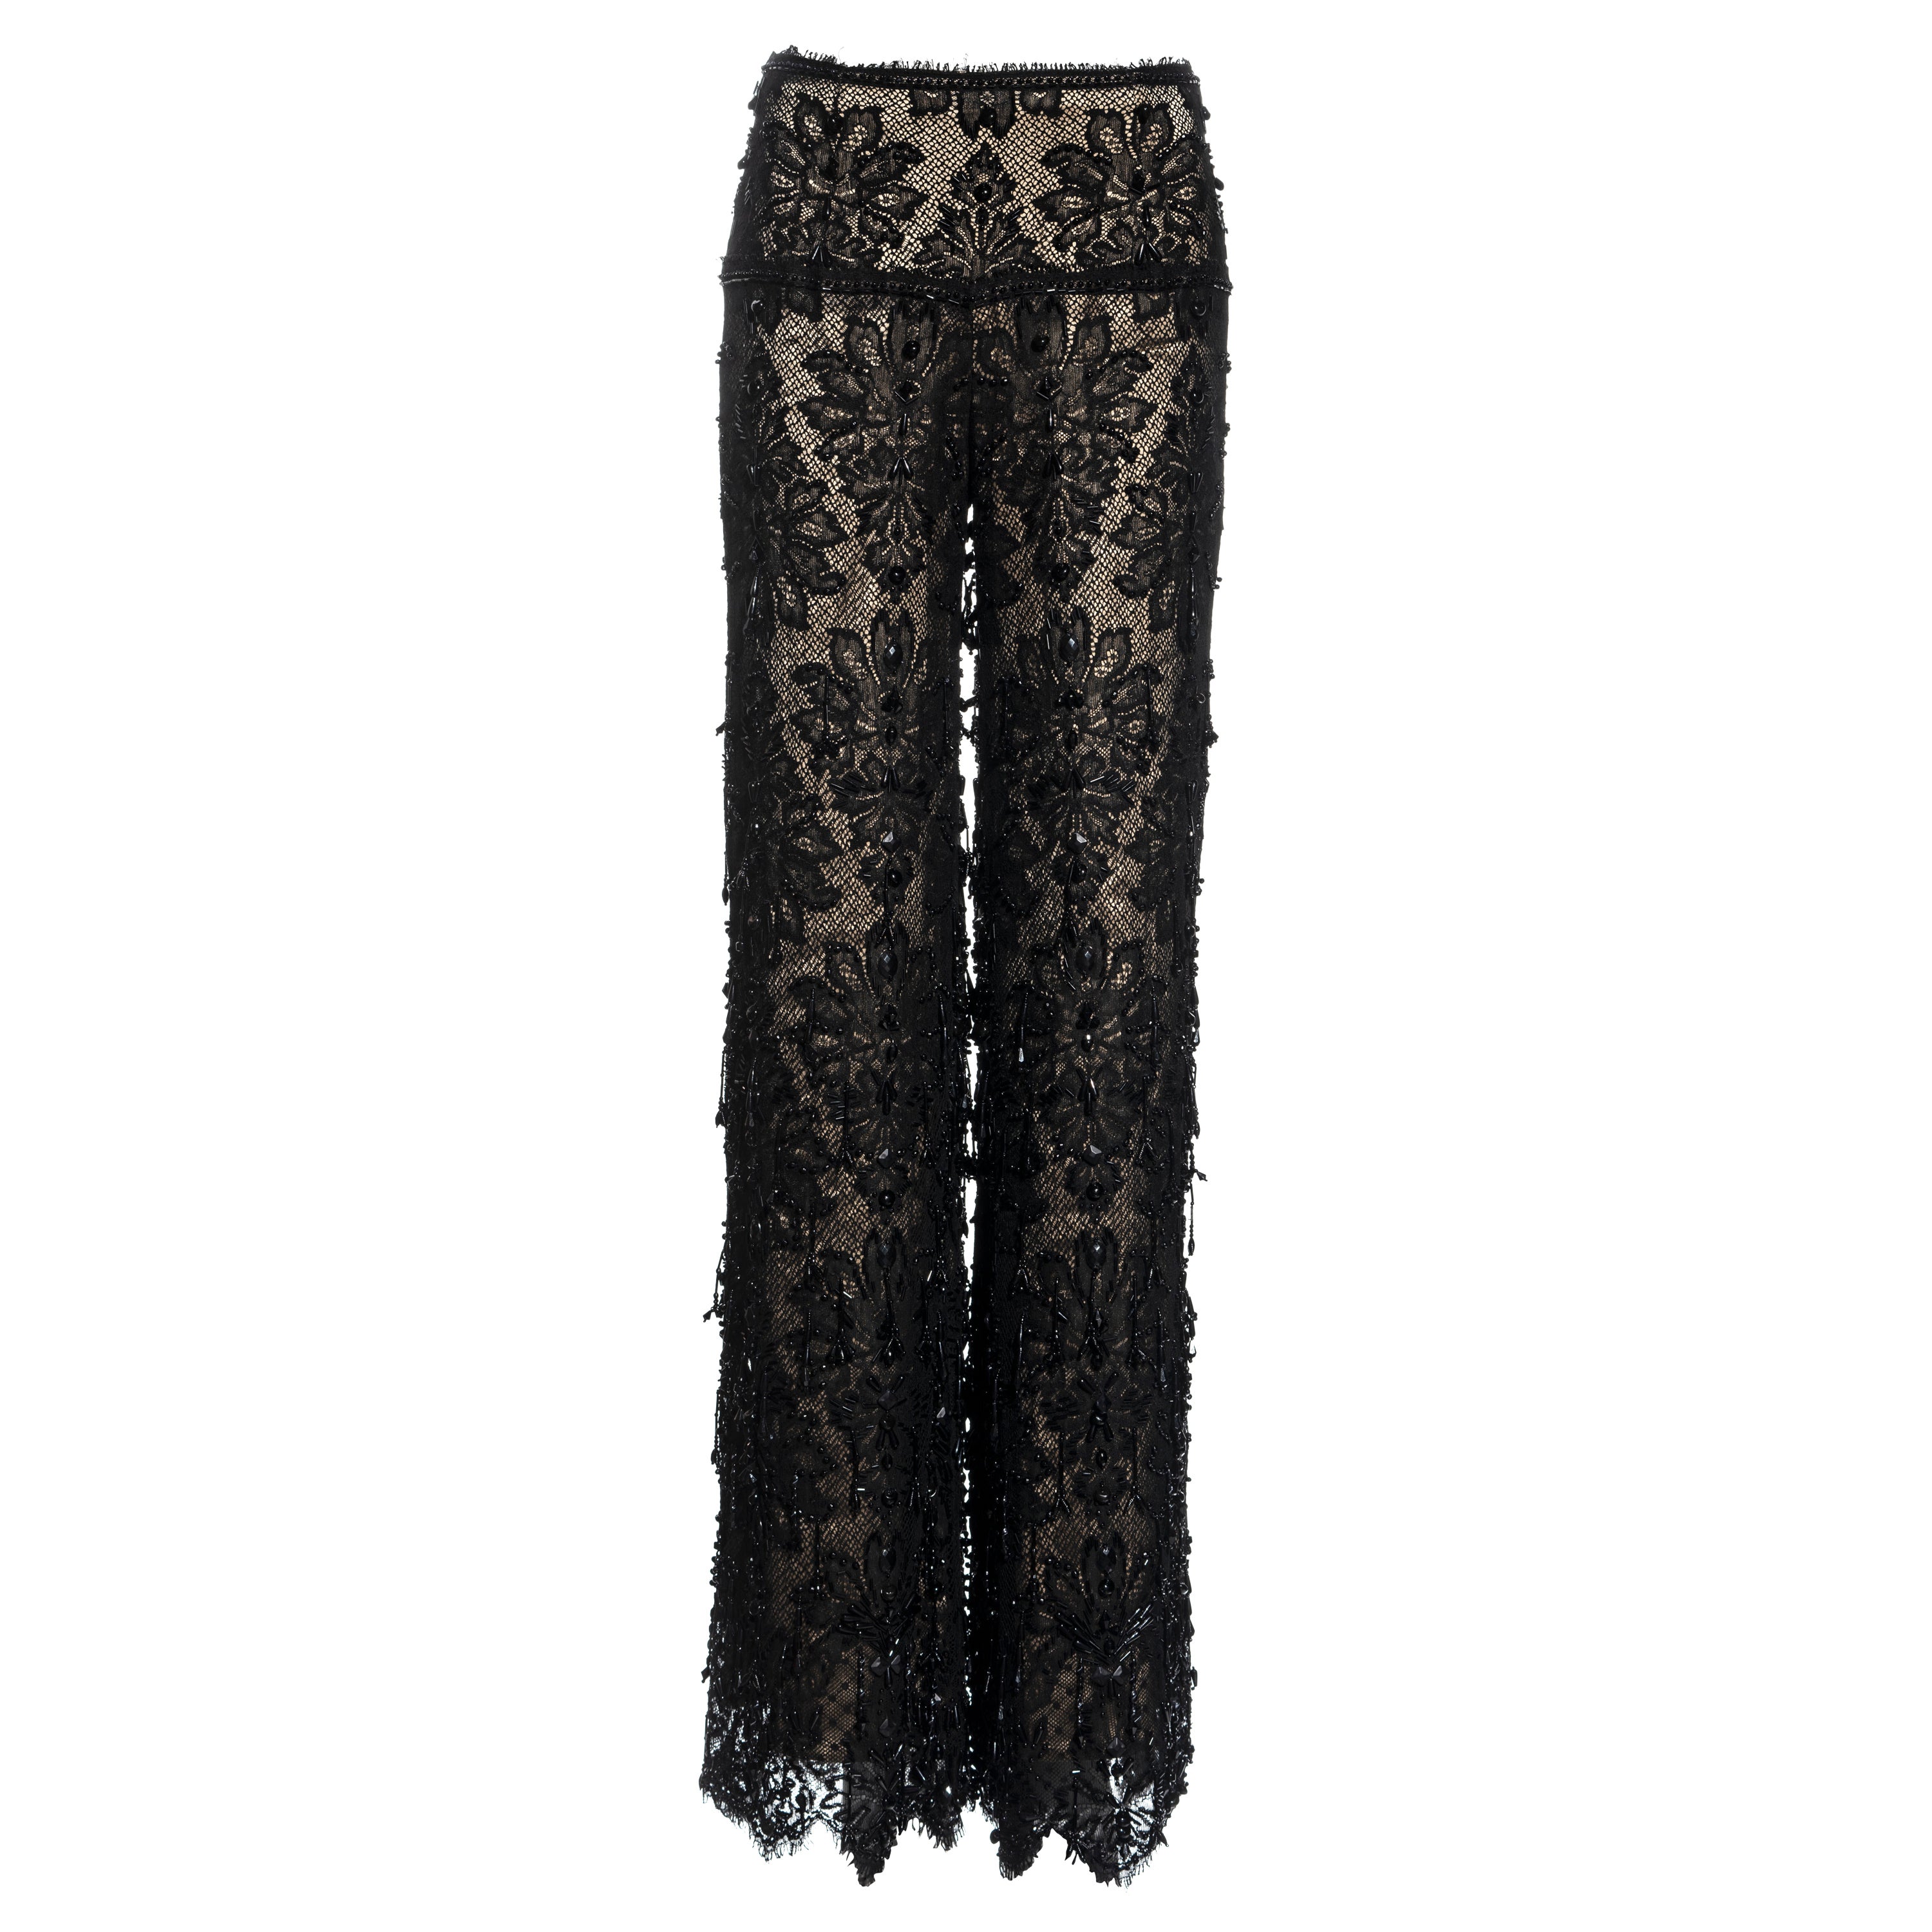 Gianfranco Ferré black beaded lace evening pants, ss 2002 For Sale